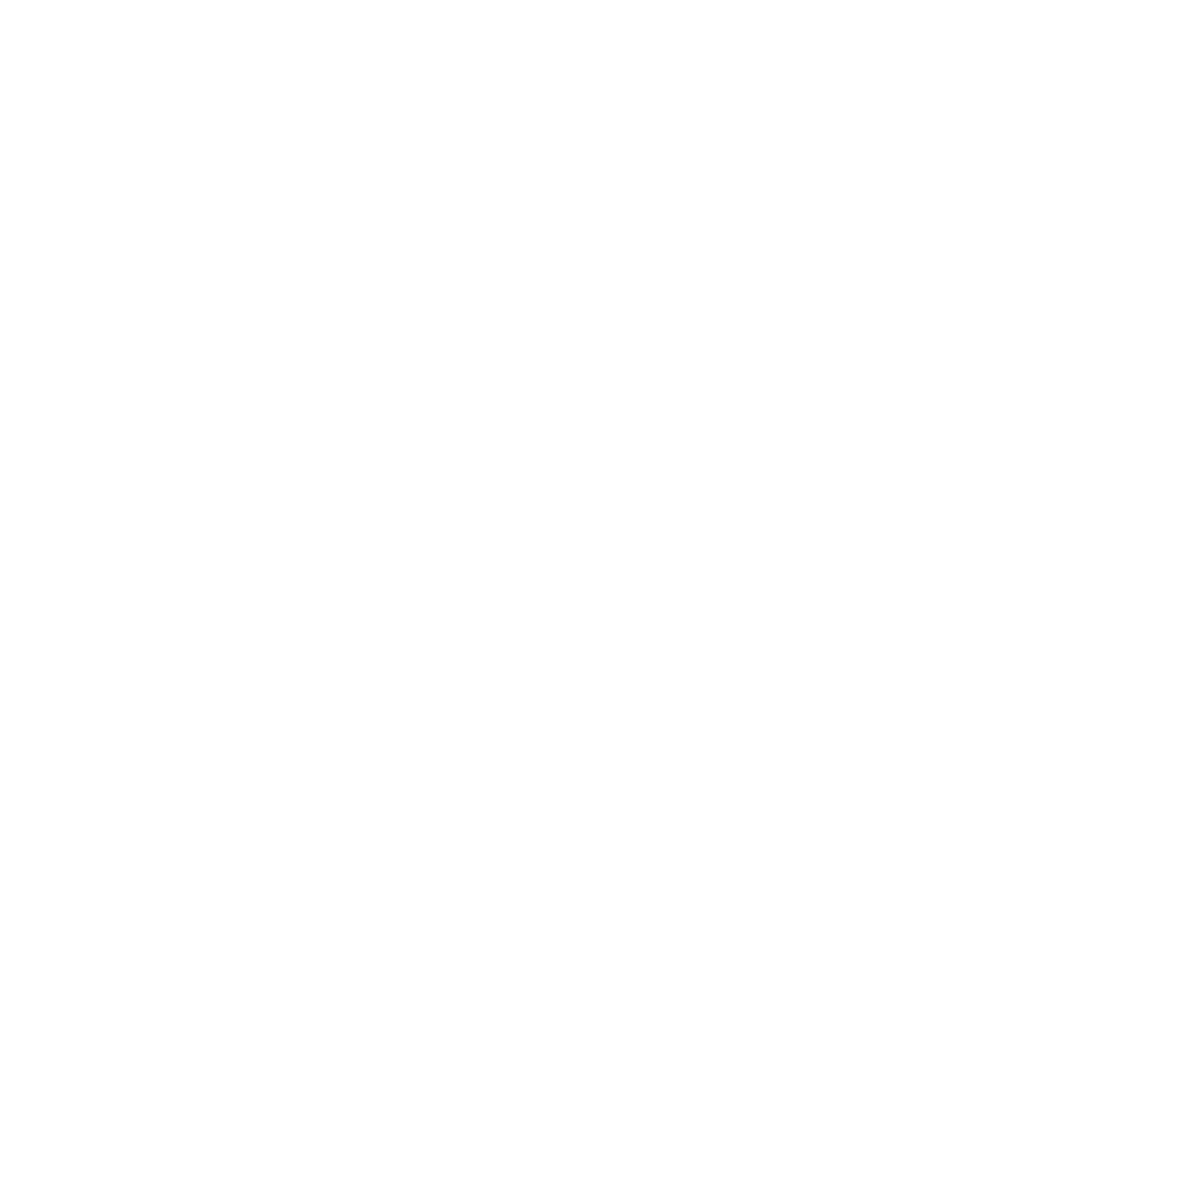 WHAT THE VAKMAN